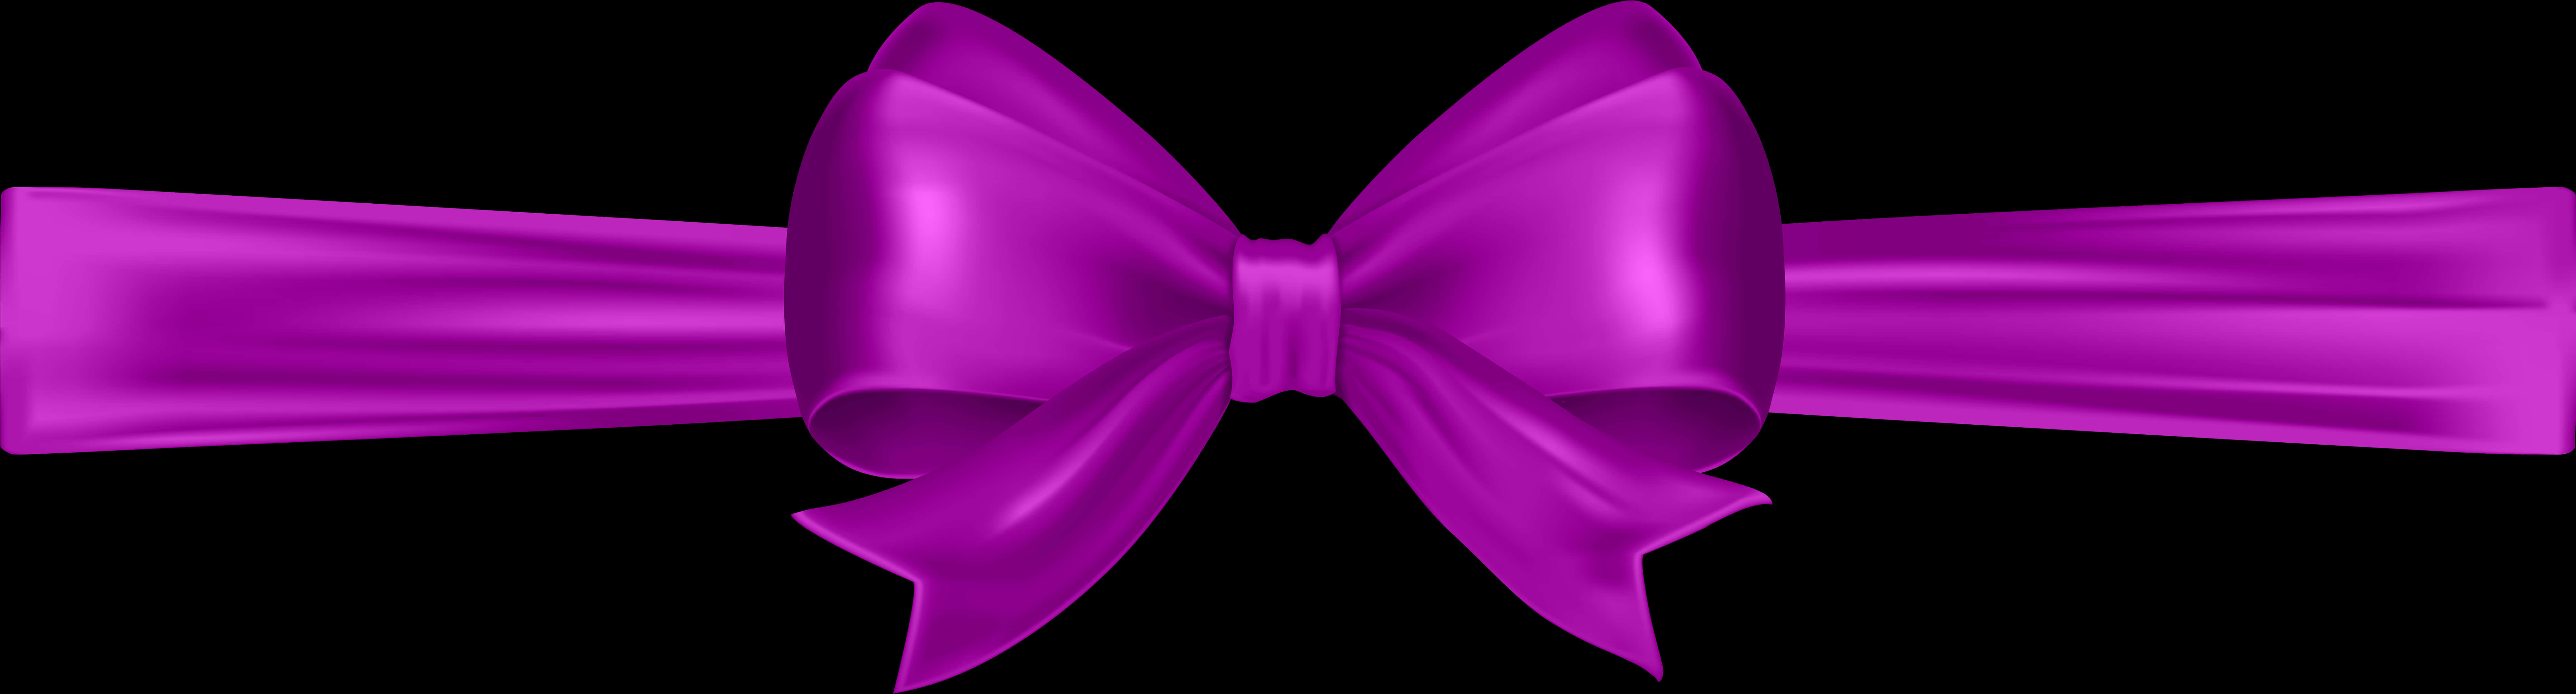 Purple Satin Gift Bow